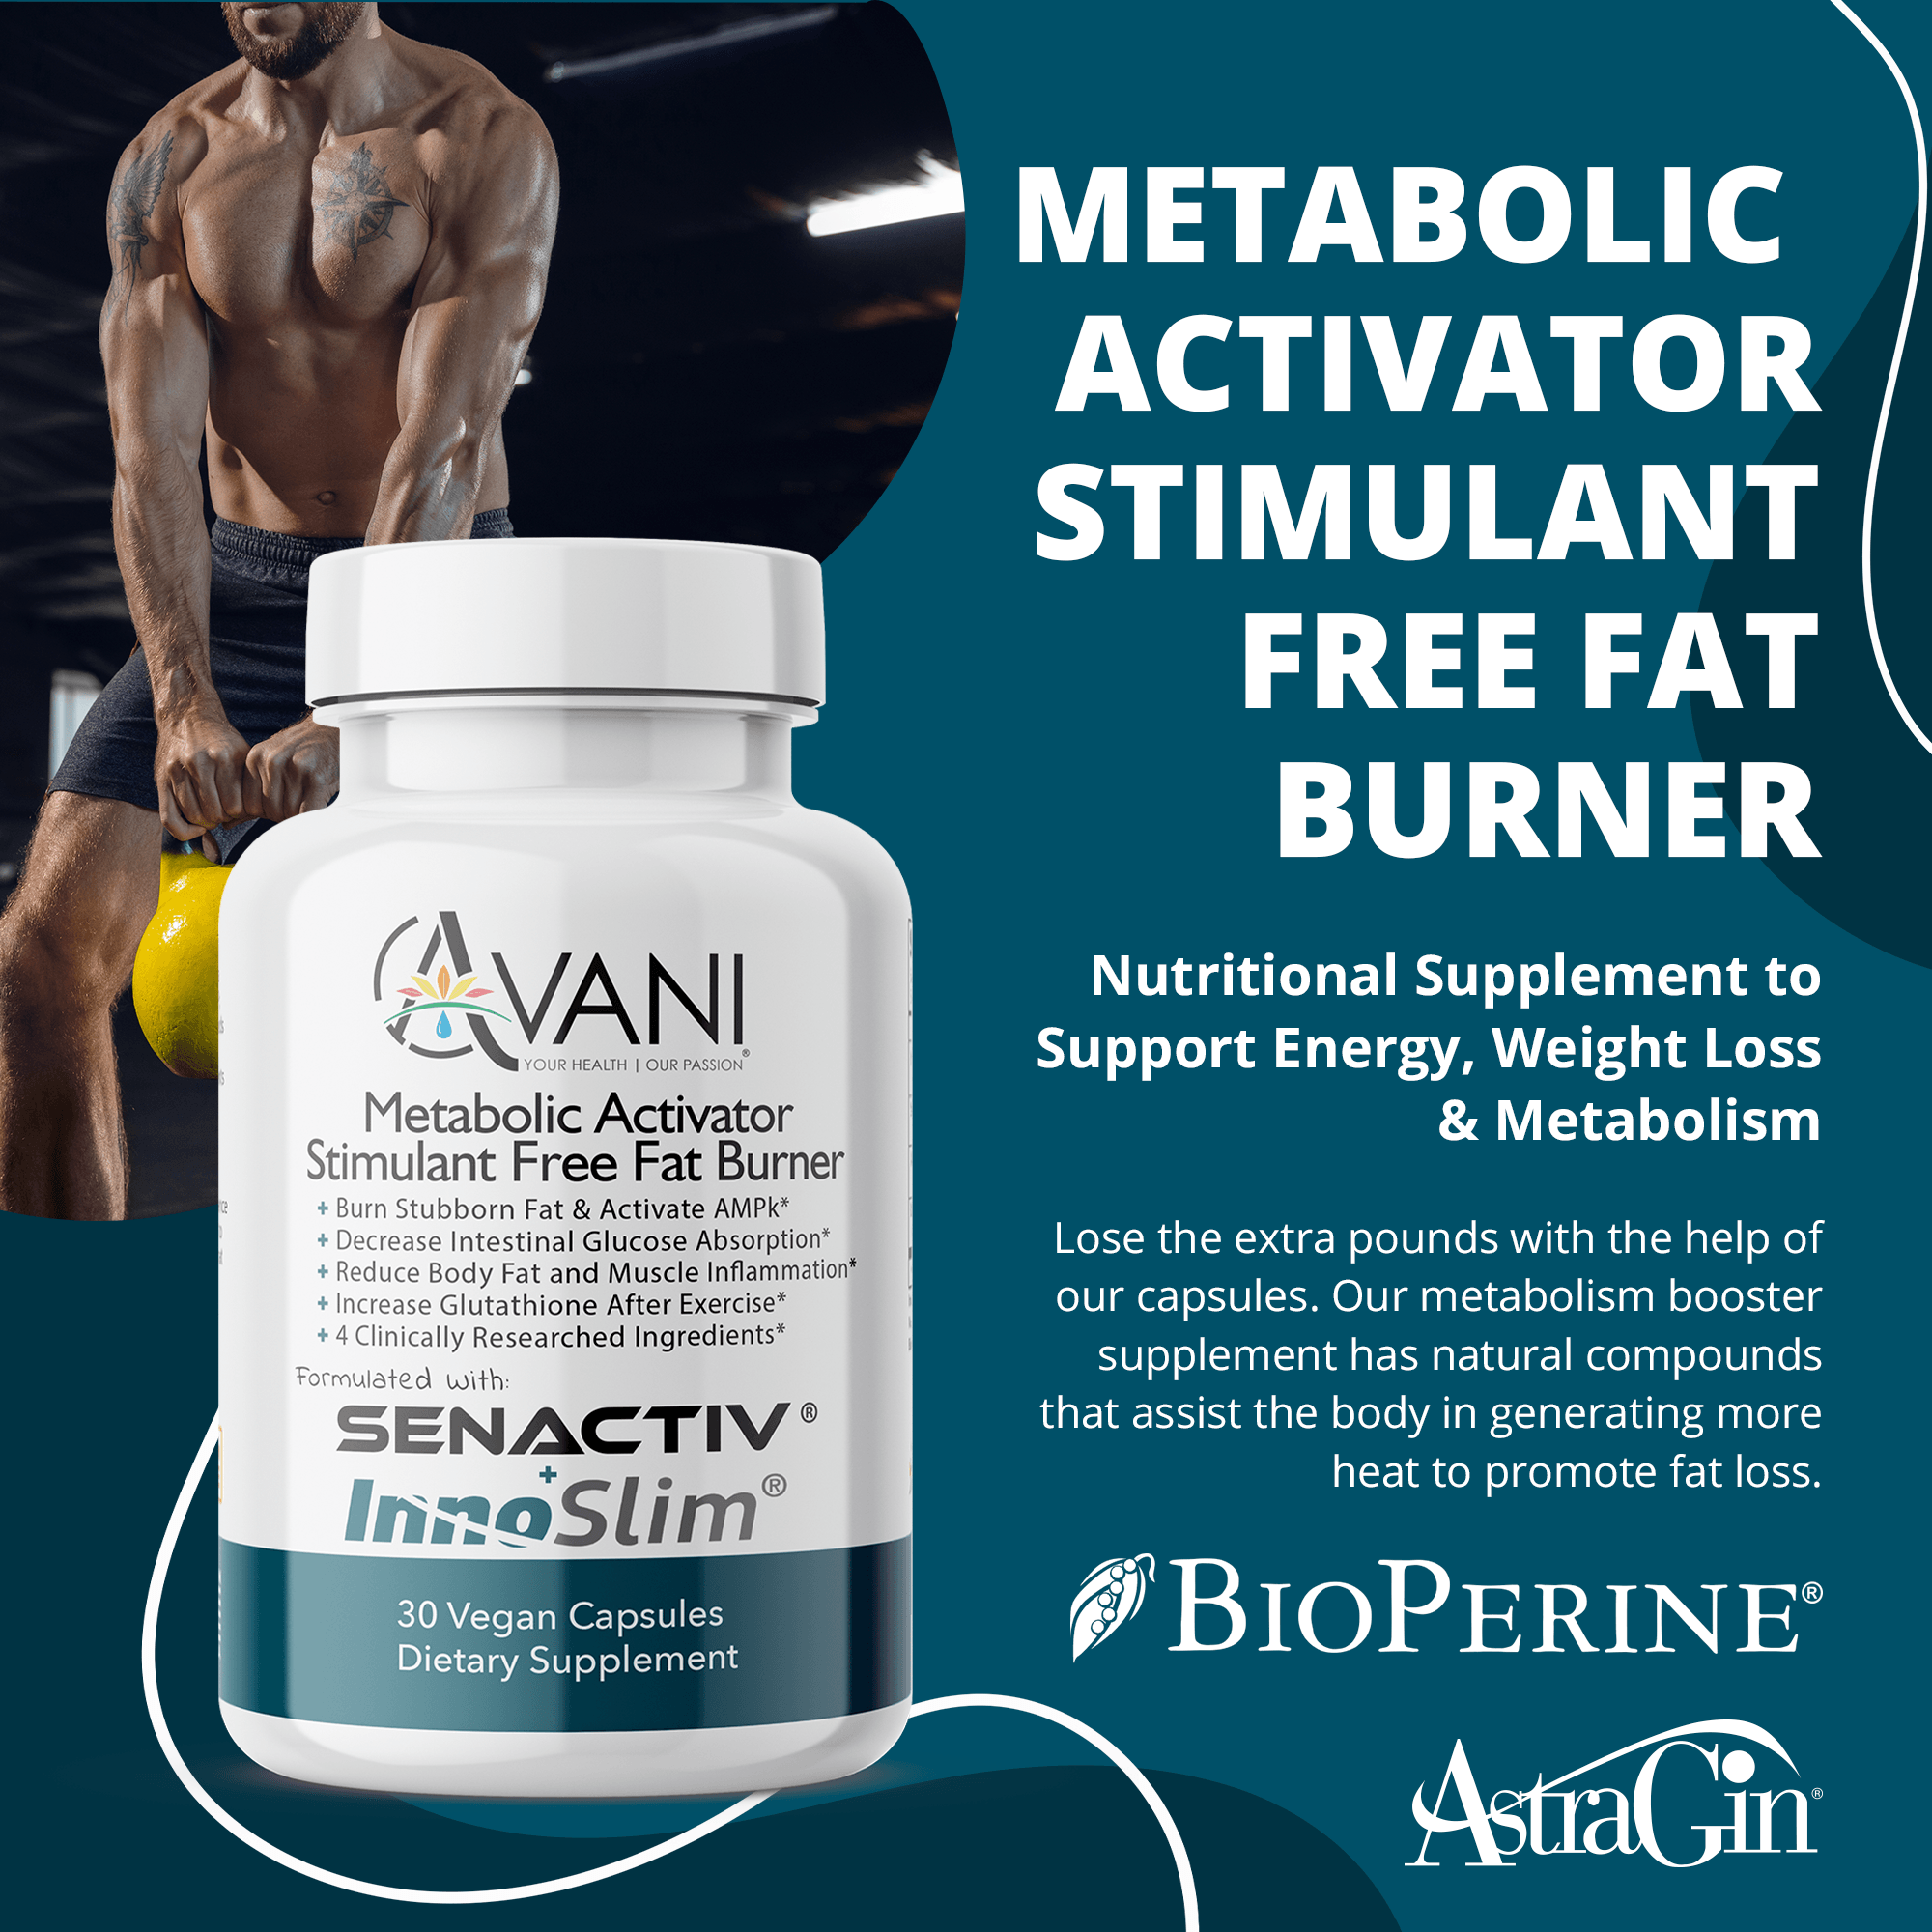 Metabolic Activator with Senactiv® + InnoSlim® - Avani Wellness